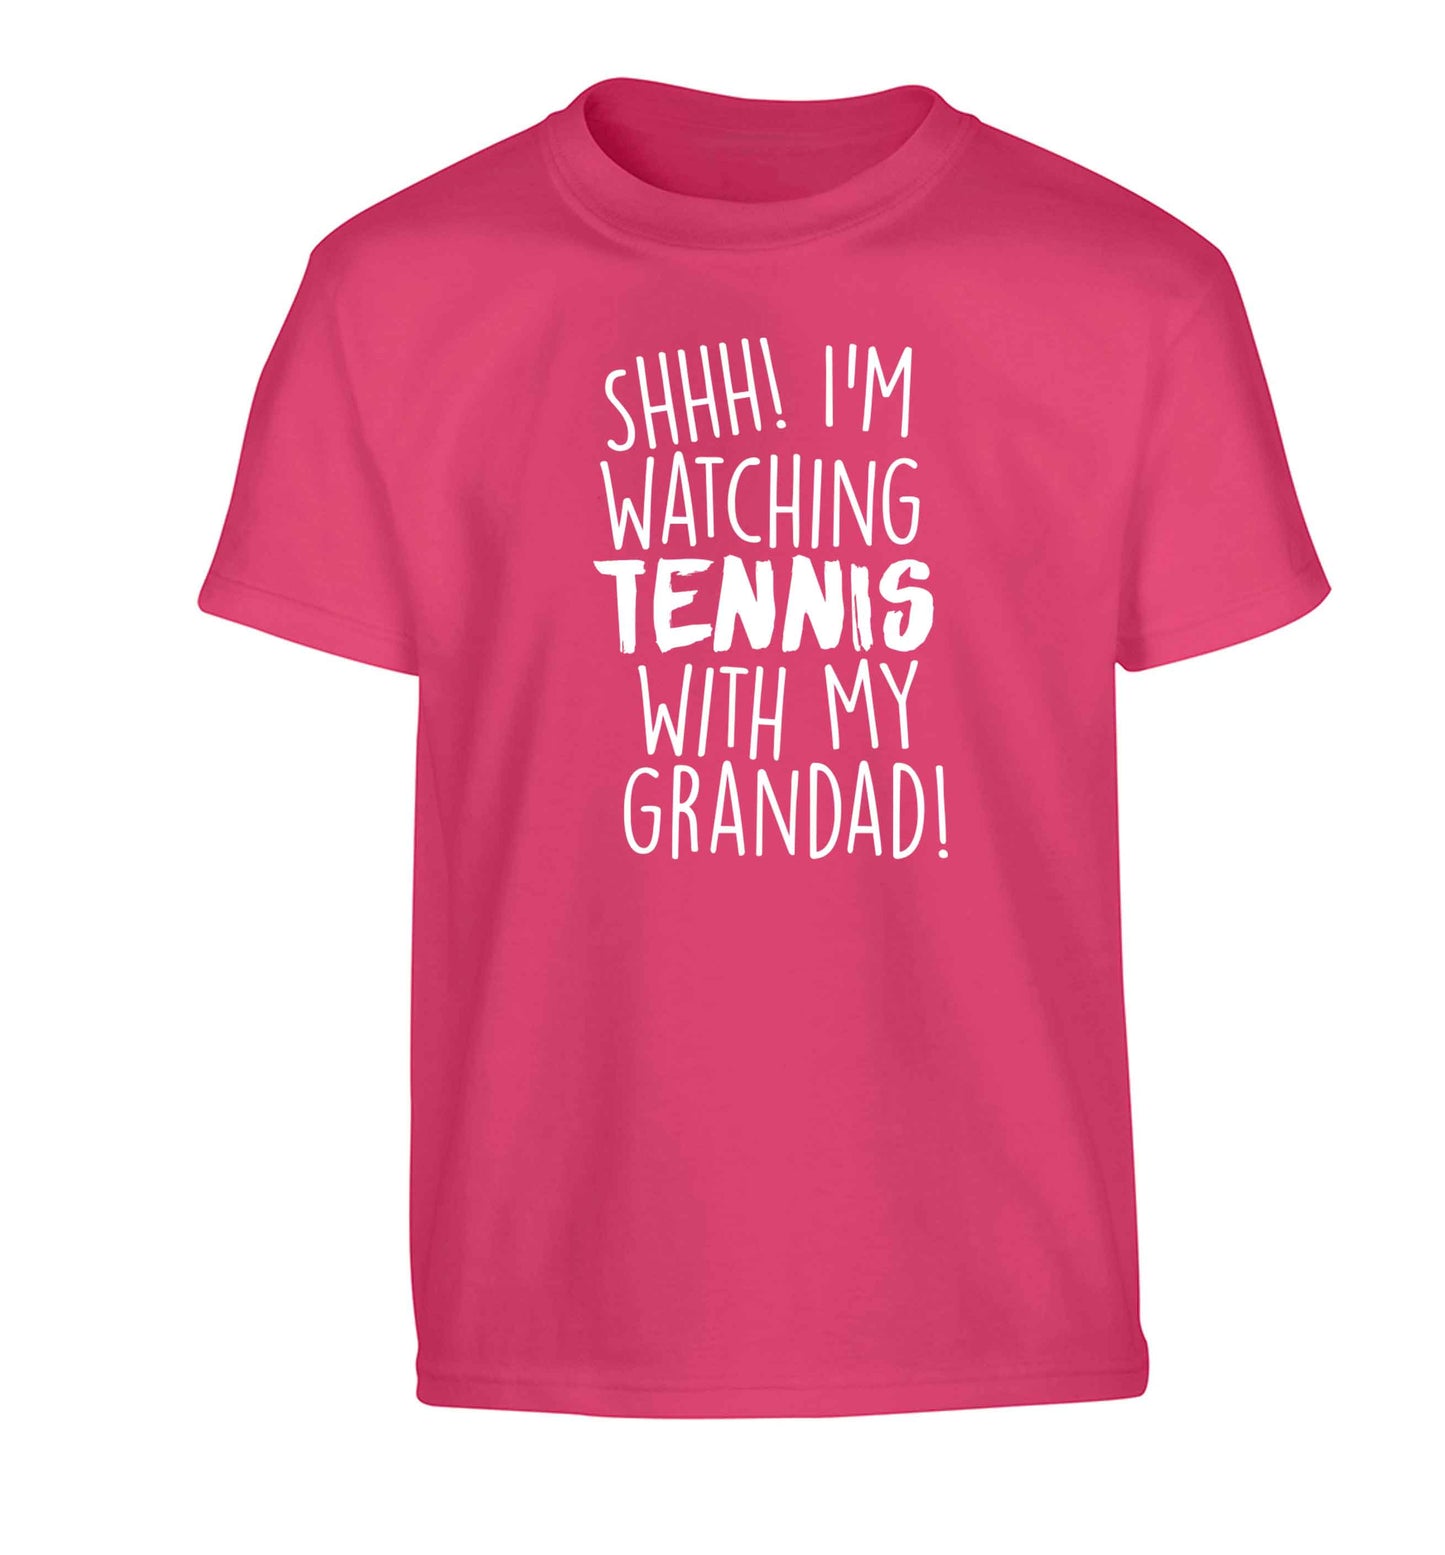 Shh! I'm watching tennis with my grandad! Children's pink Tshirt 12-13 Years